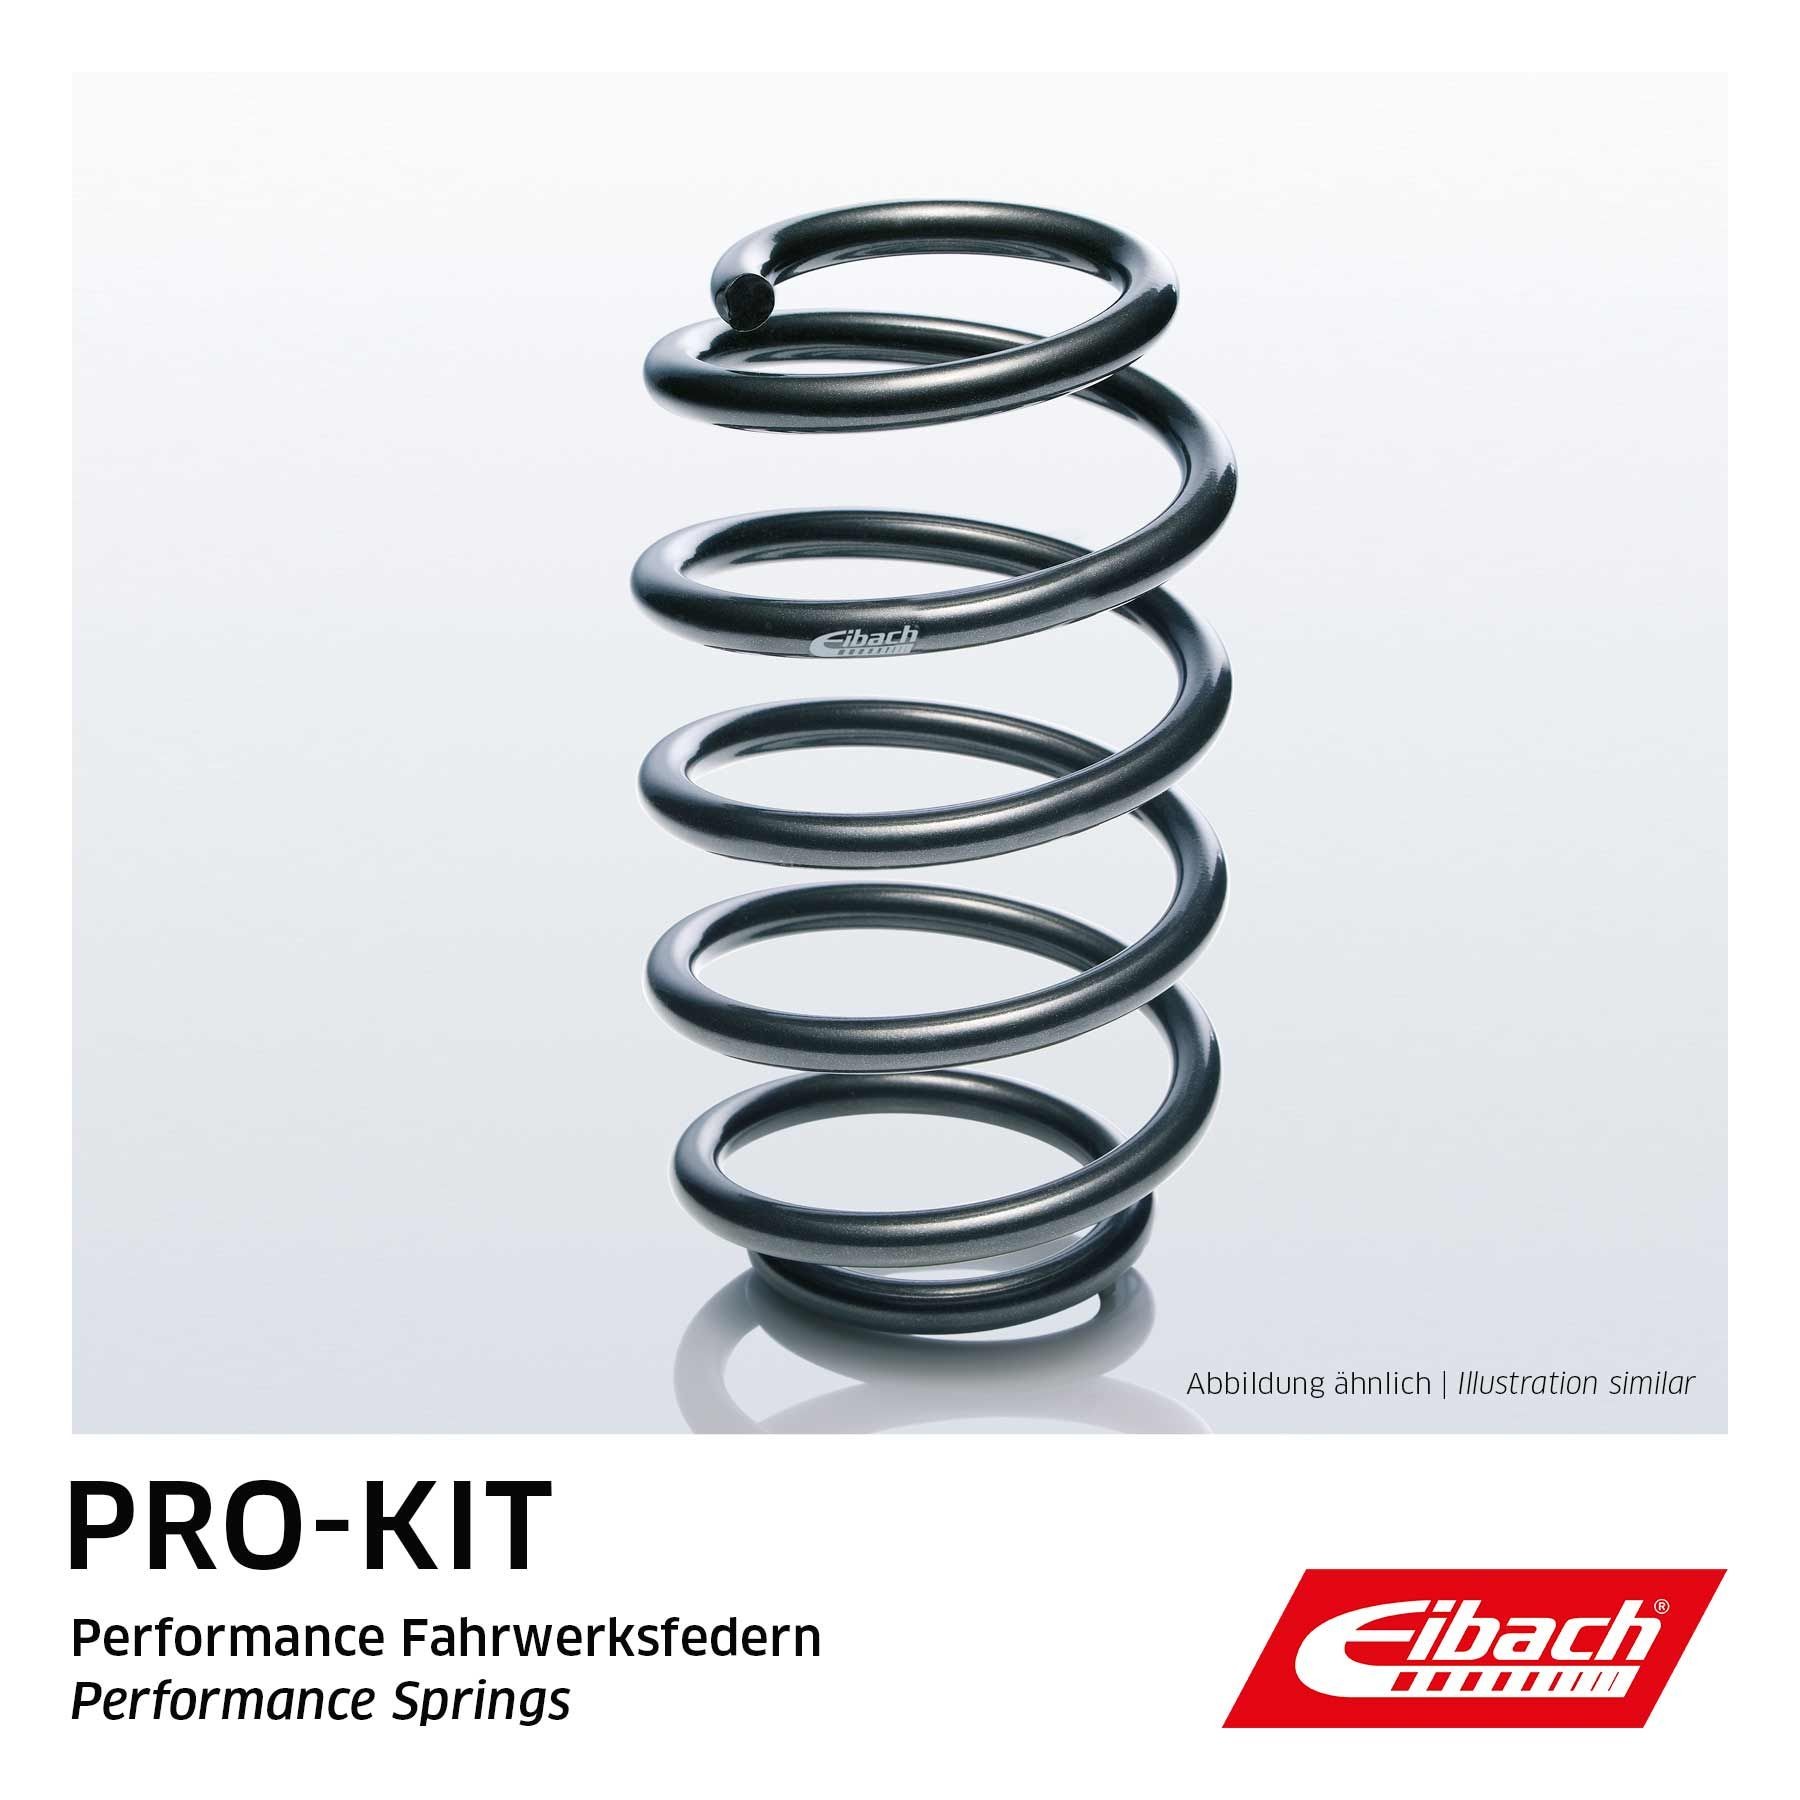 Corsa F Hatchback Shock absorption parts - Coil spring EIBACH F11-22-020-01-FA